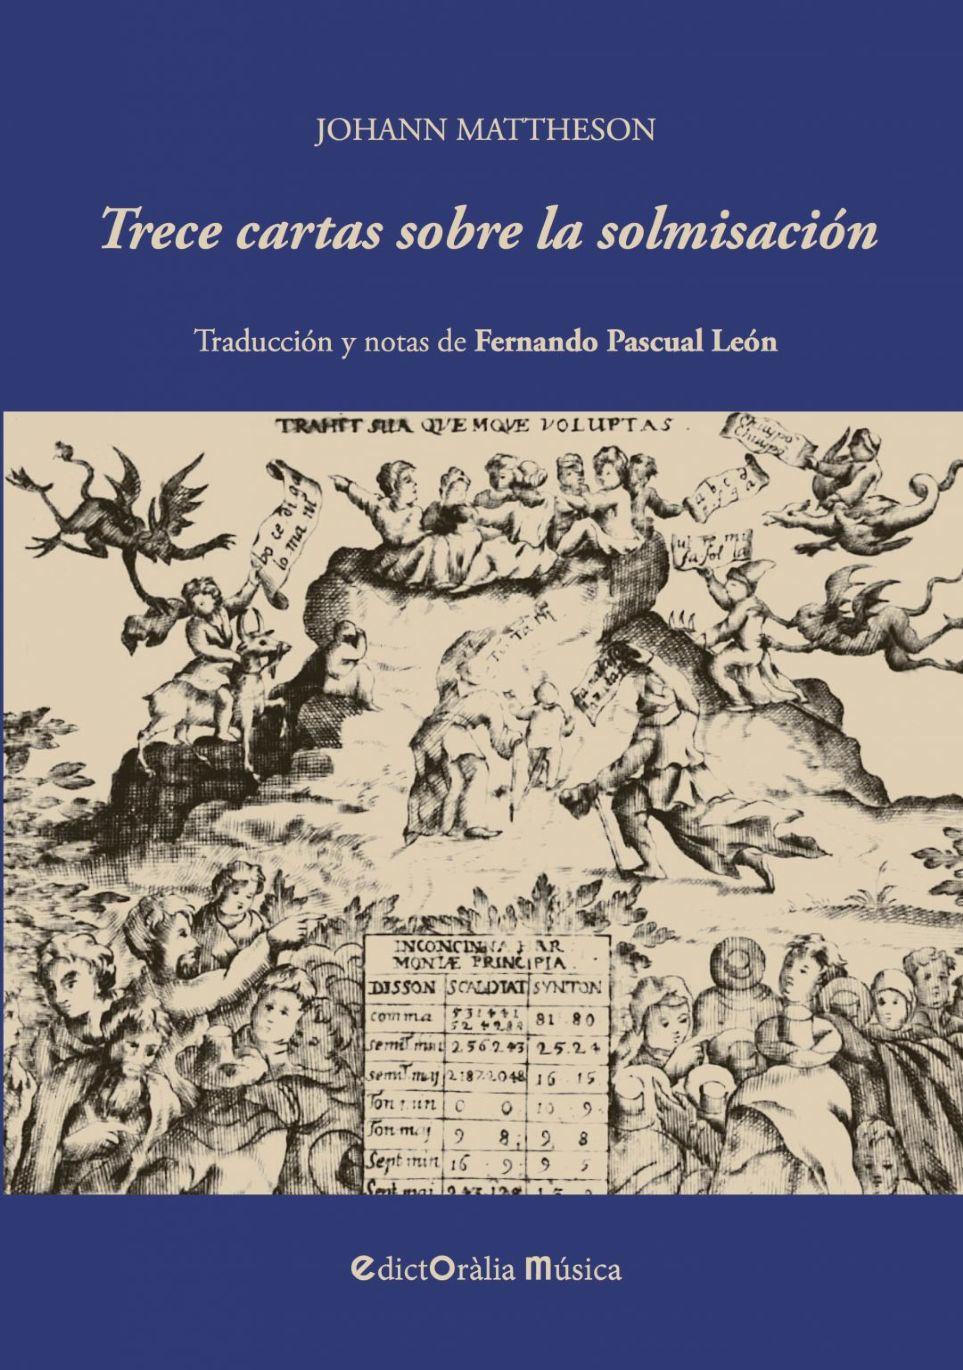 EdictOrlia, Trece cartas sobre la solmisacin, Johann Mattheson